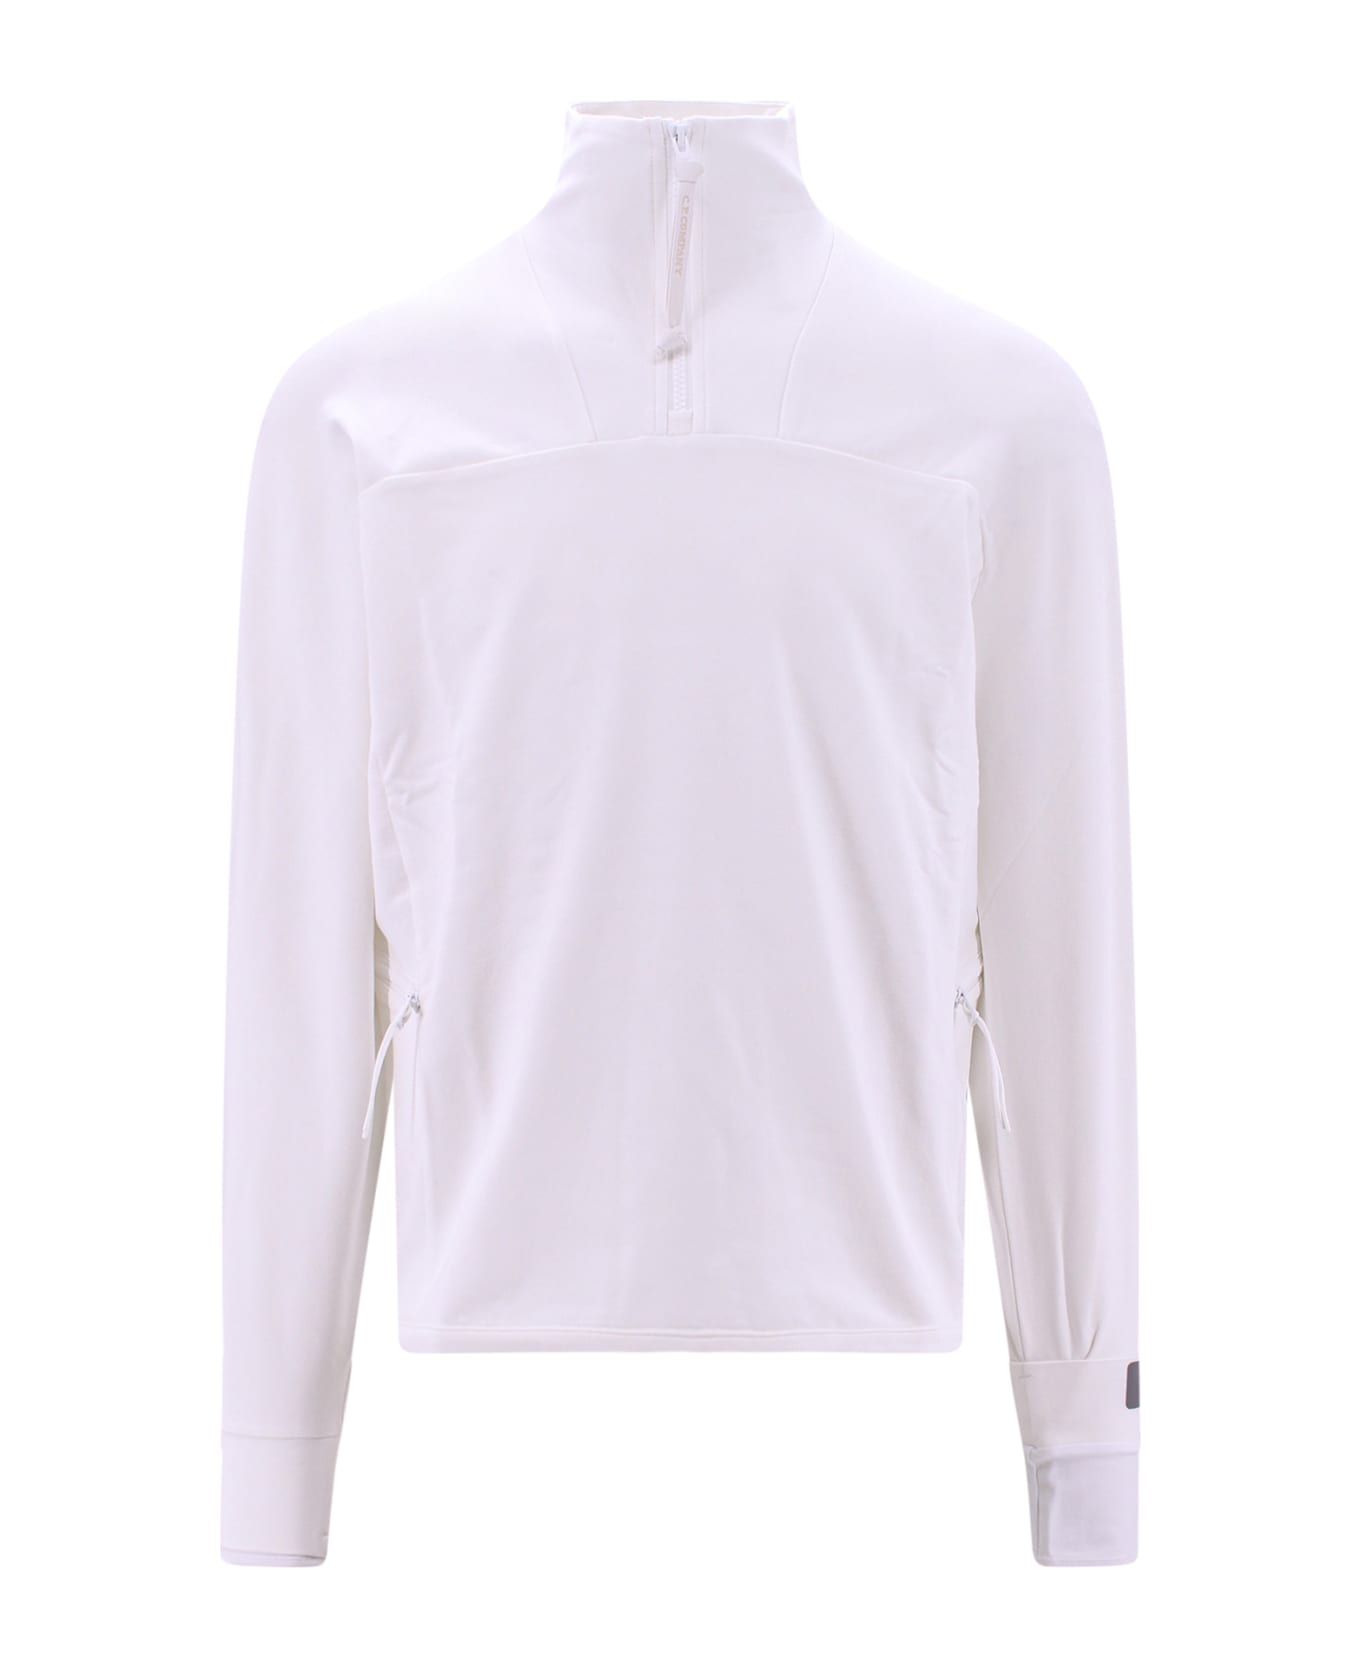 C.P. Company Sweatshirt - White